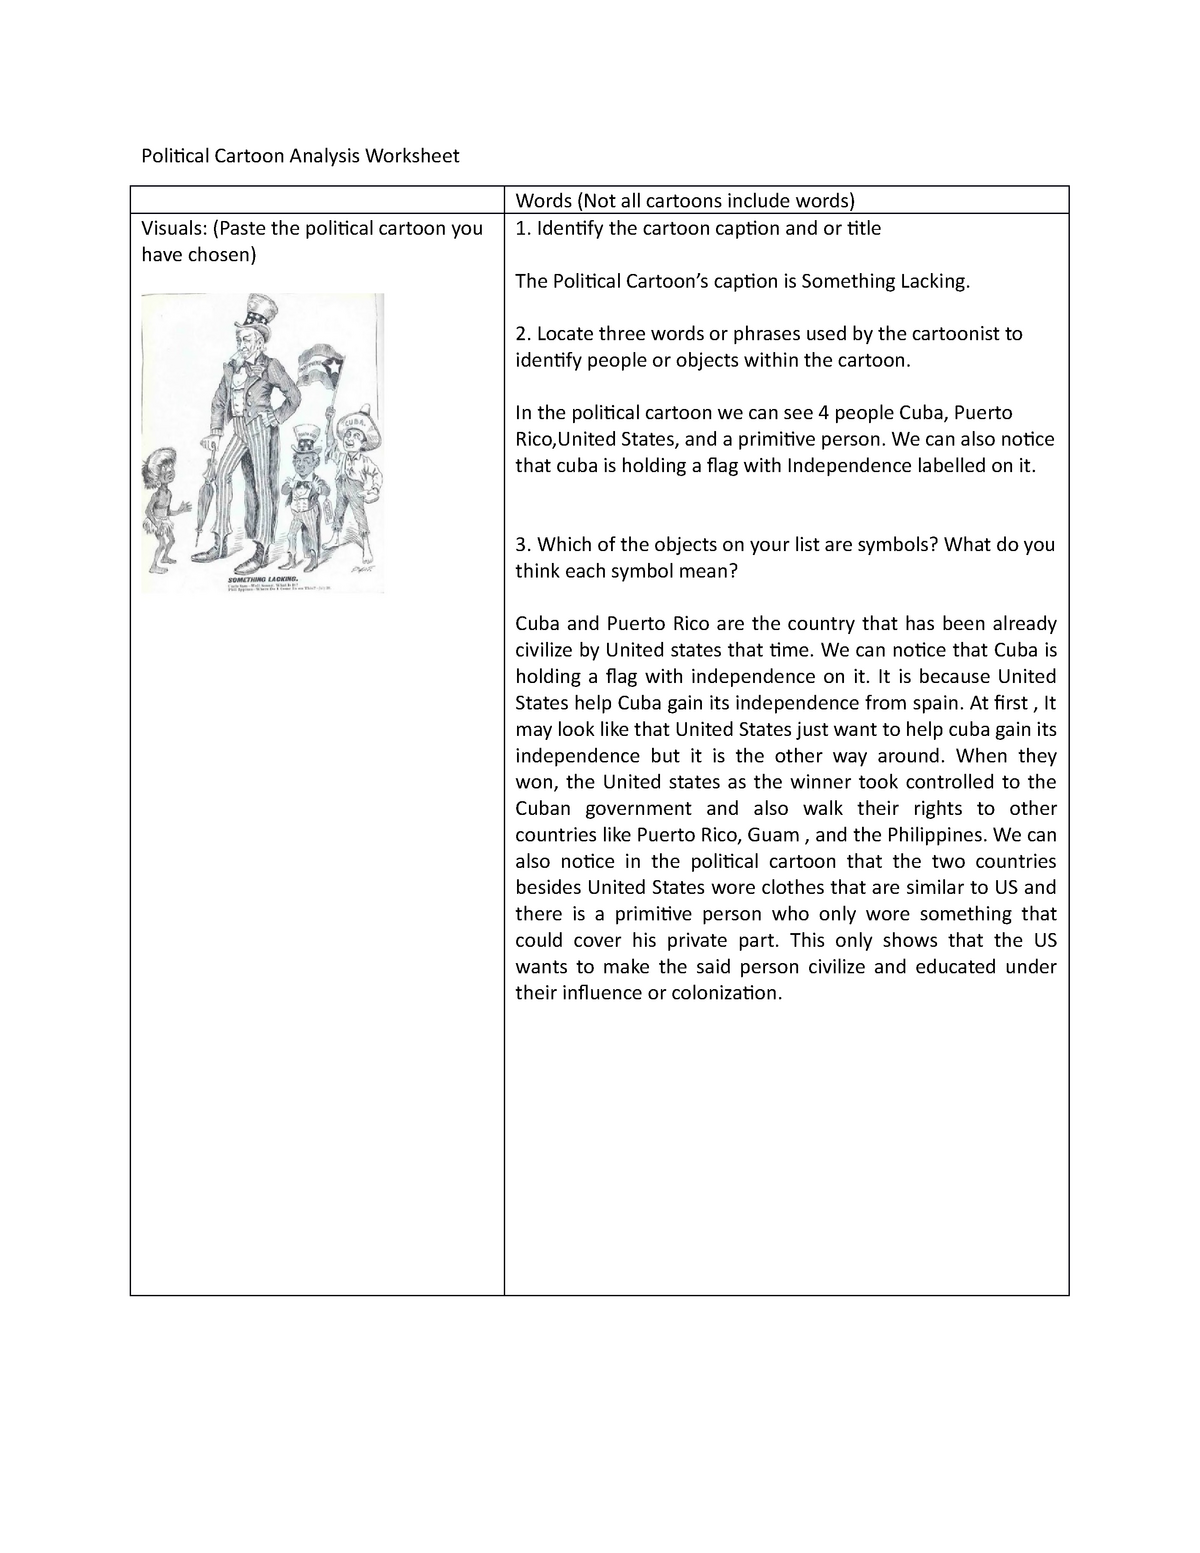 Political cartoon worksheet di ko alam basta - Human Resource Throughout Cartoon Analysis Worksheet Answers